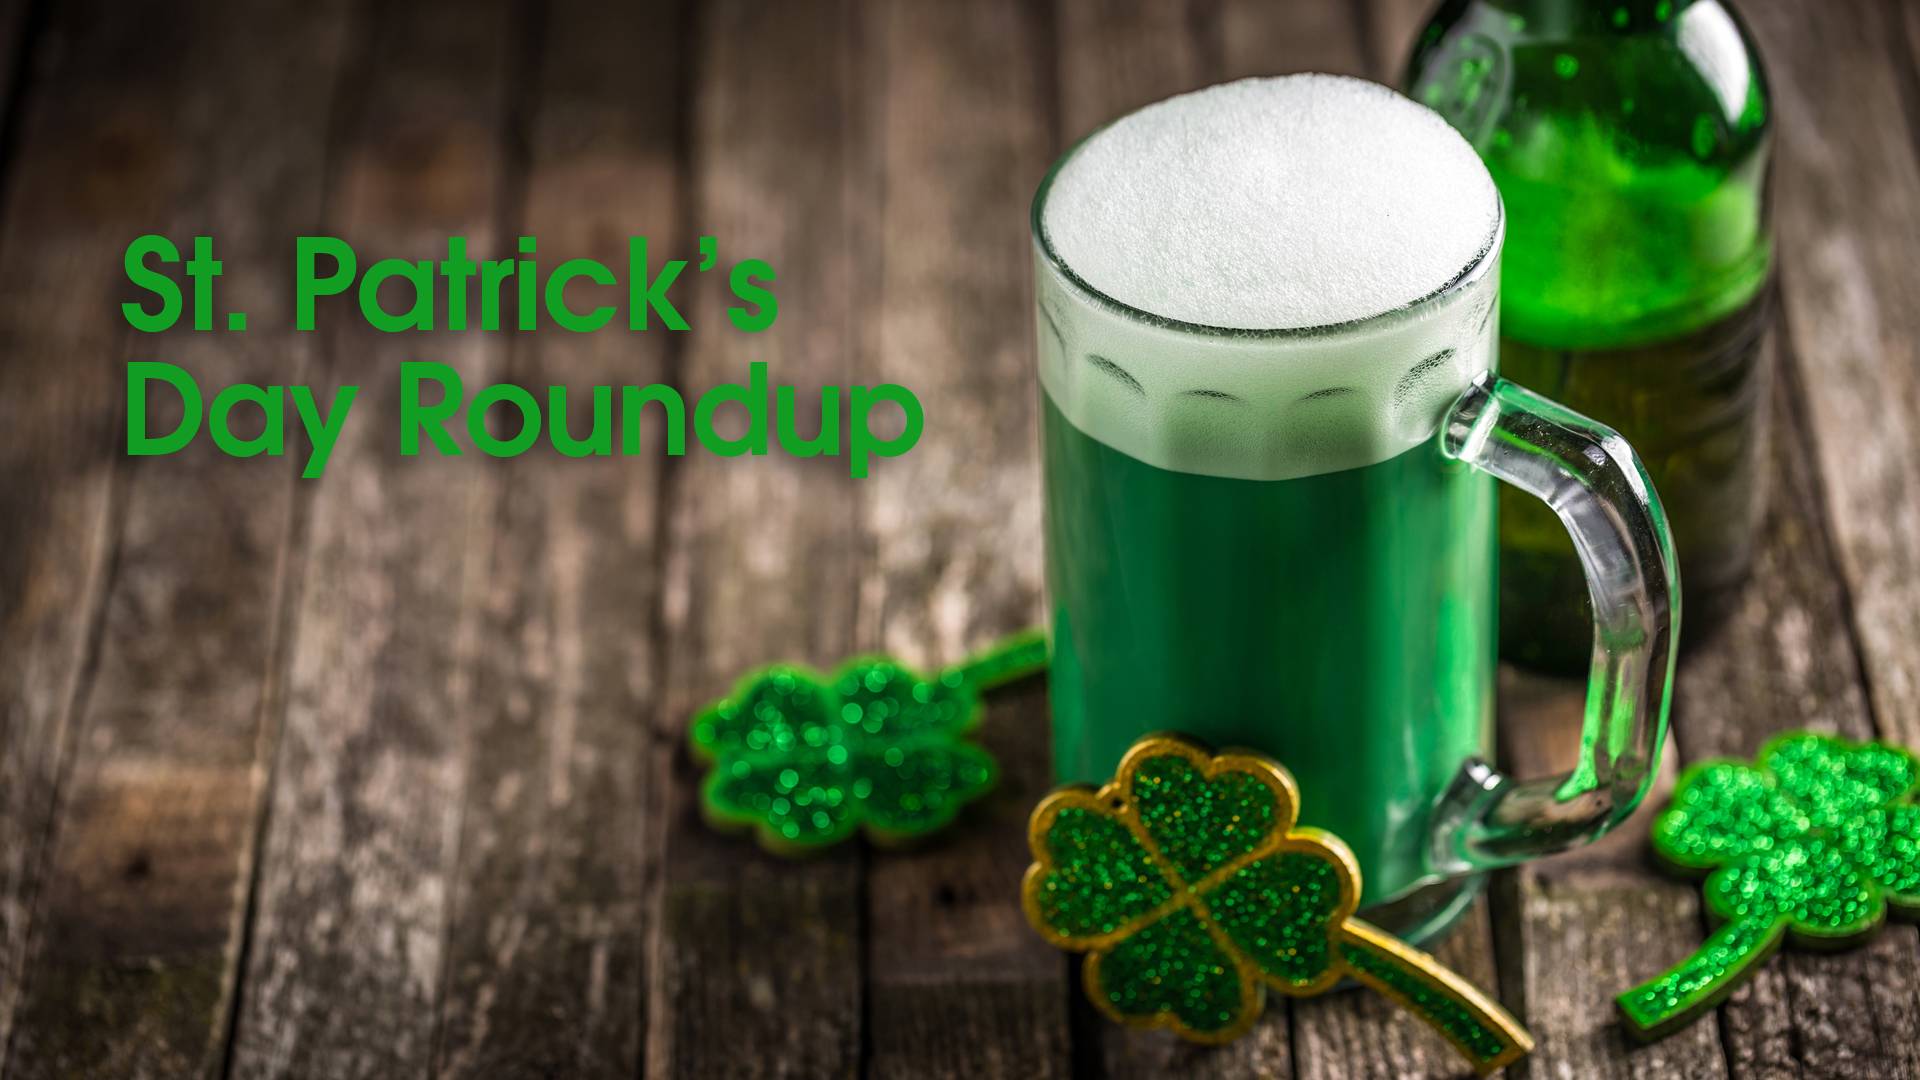 St. Patrick's Day Roundup